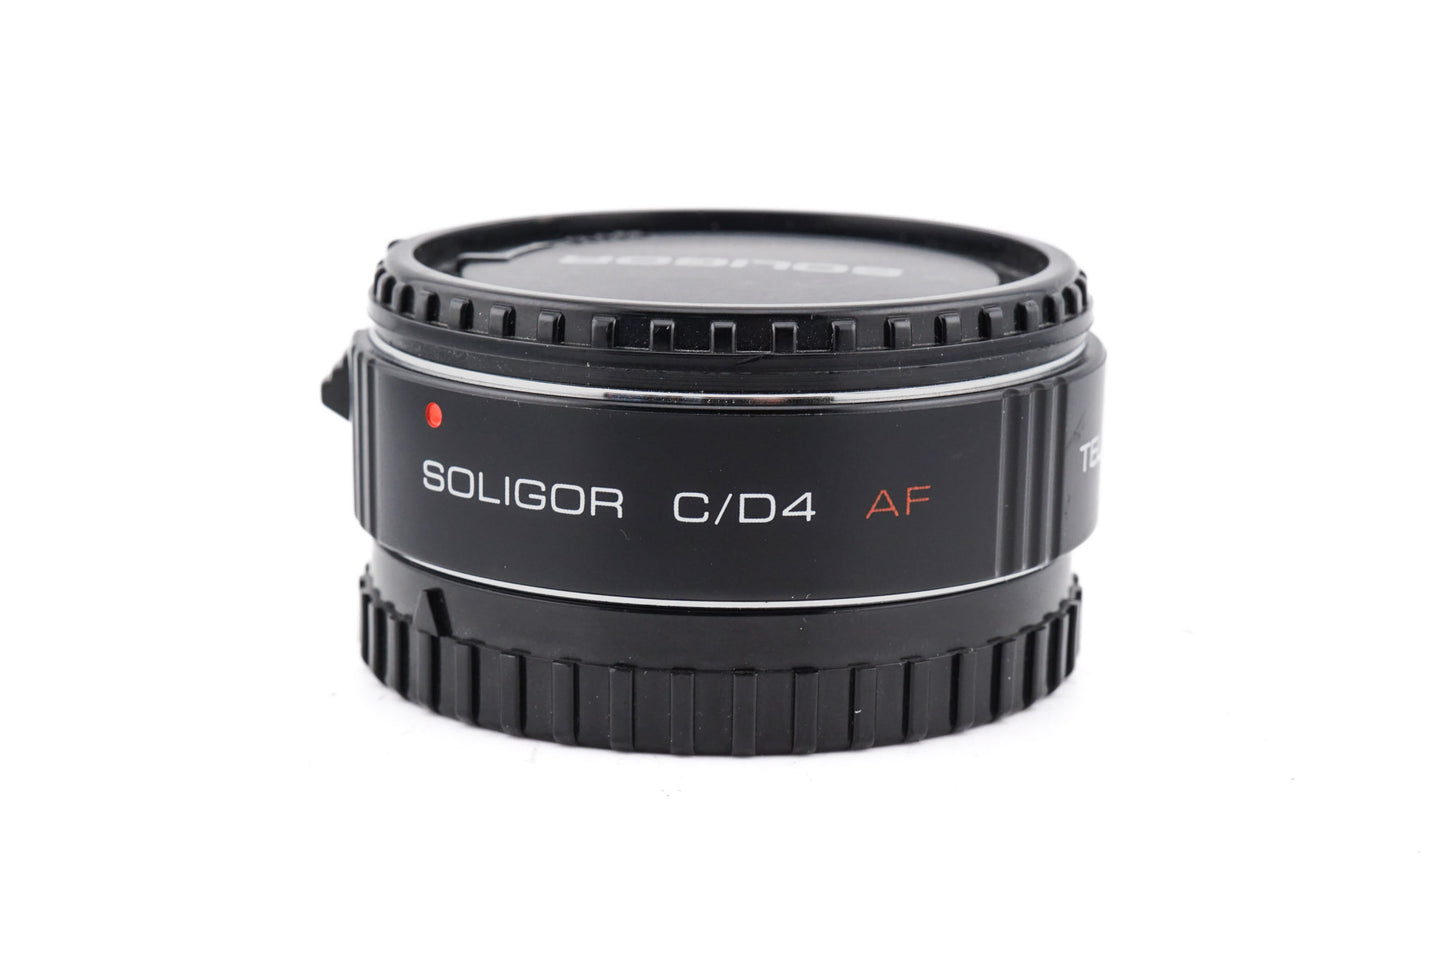 Soligor 1.7x Tele-Converter C/D4 AF - Accessory